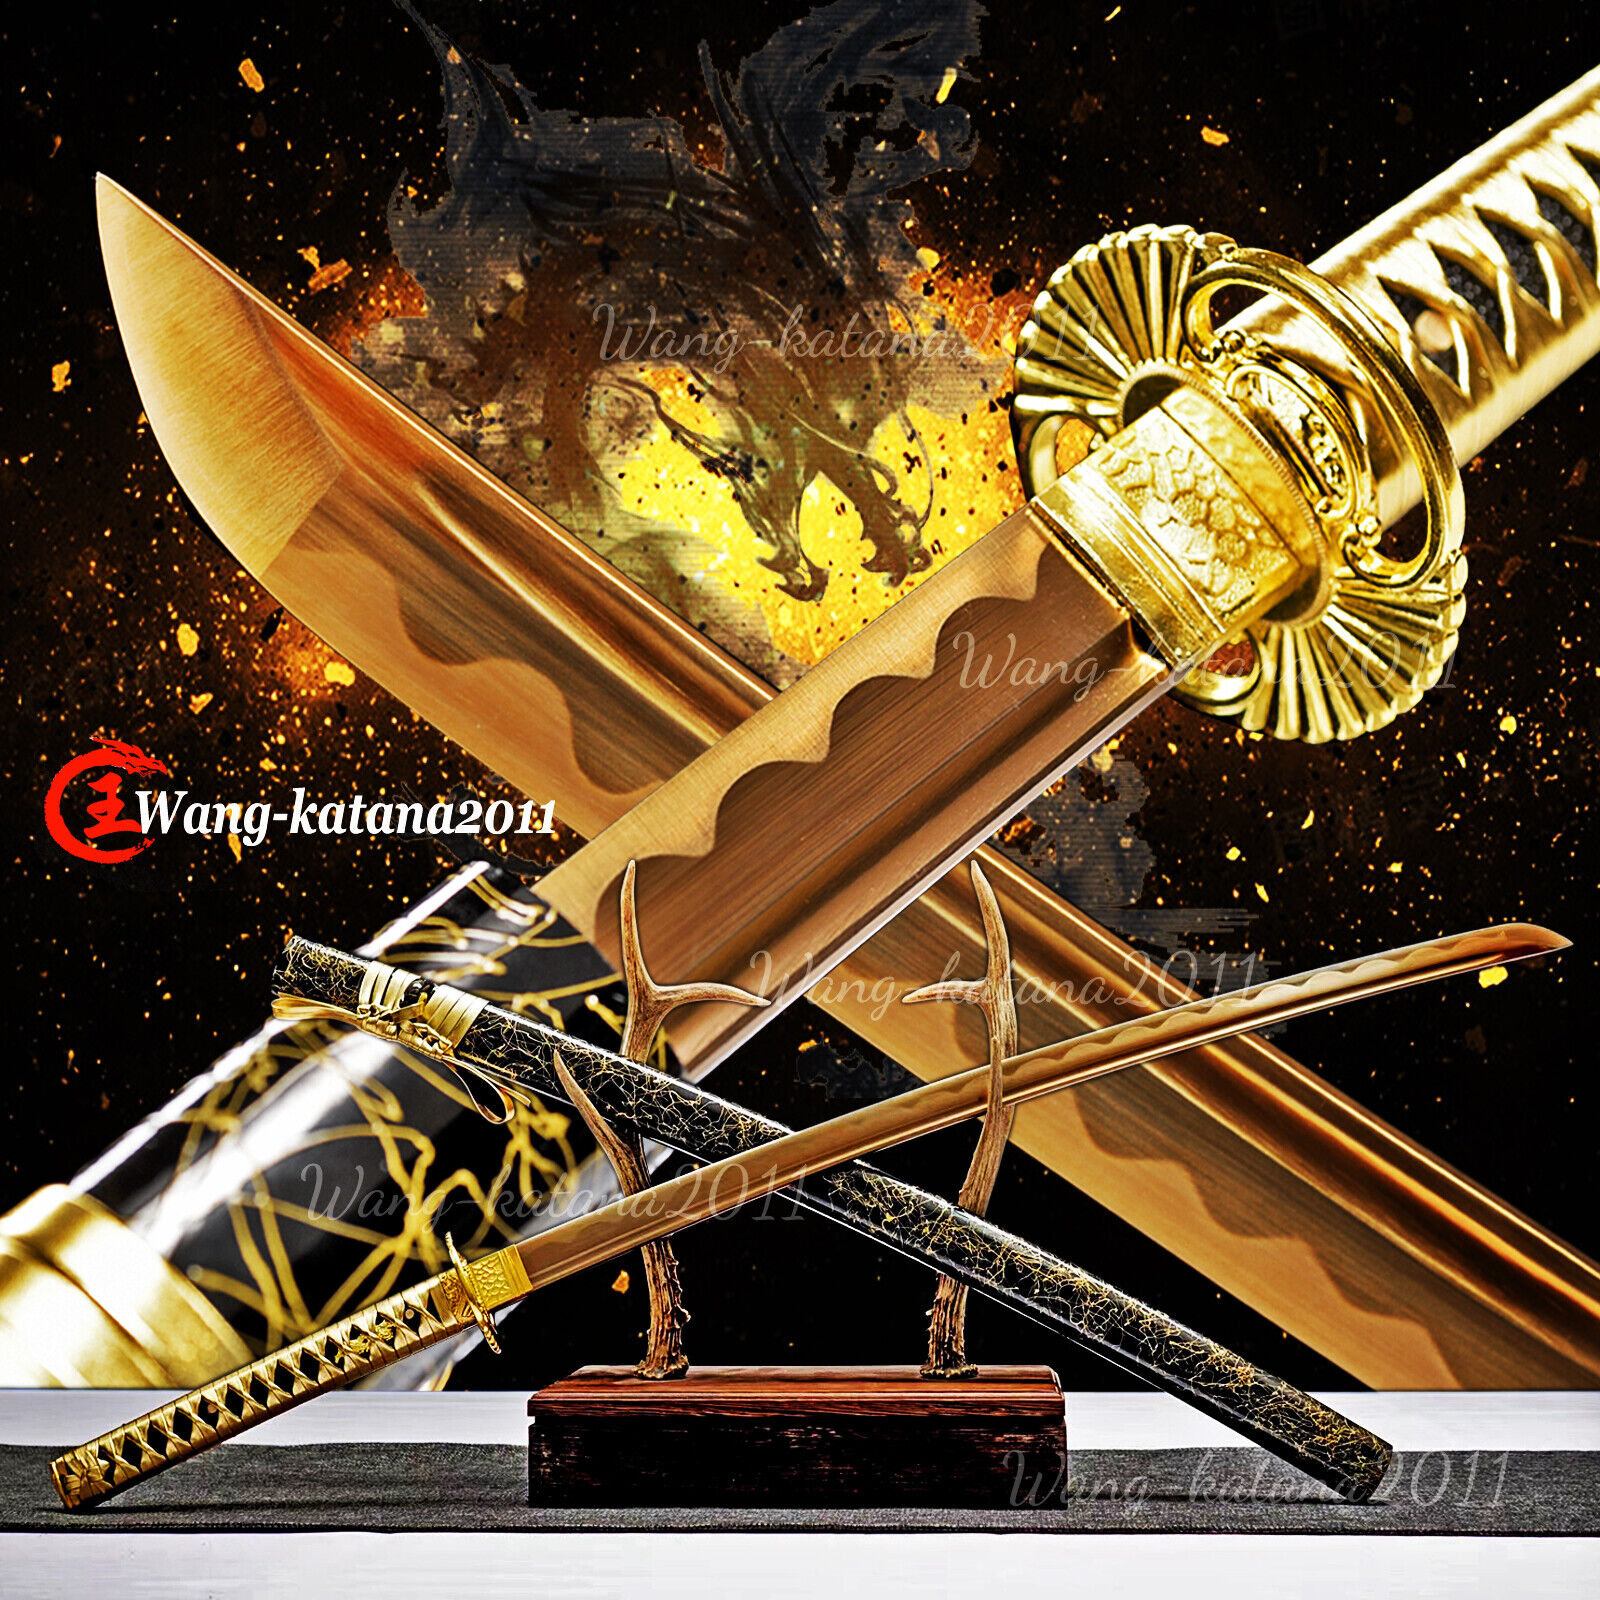 All Gold Functional Sword 1095 Steel Battle Ready Sharp Japanese Samurai Katana